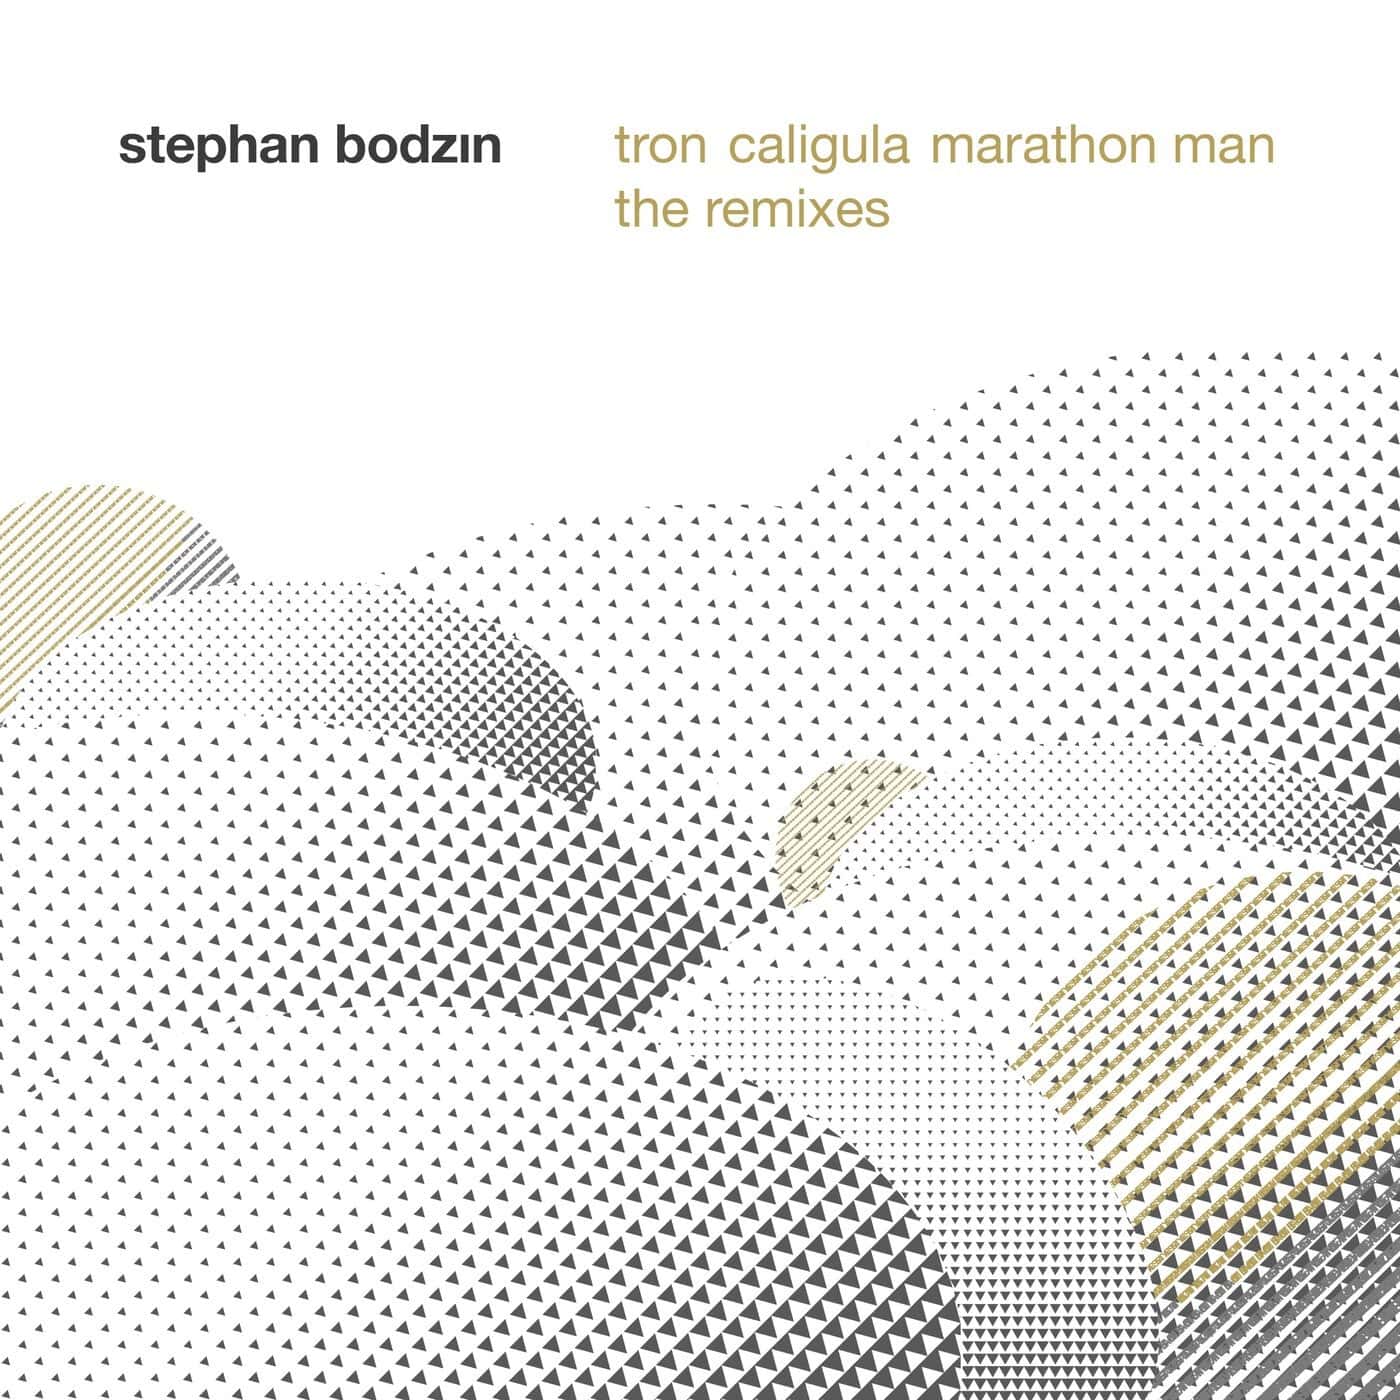 image cover: Stephan Bodzin - Tron - Caligula - Marathon Man (The Remixes) / SYST00133